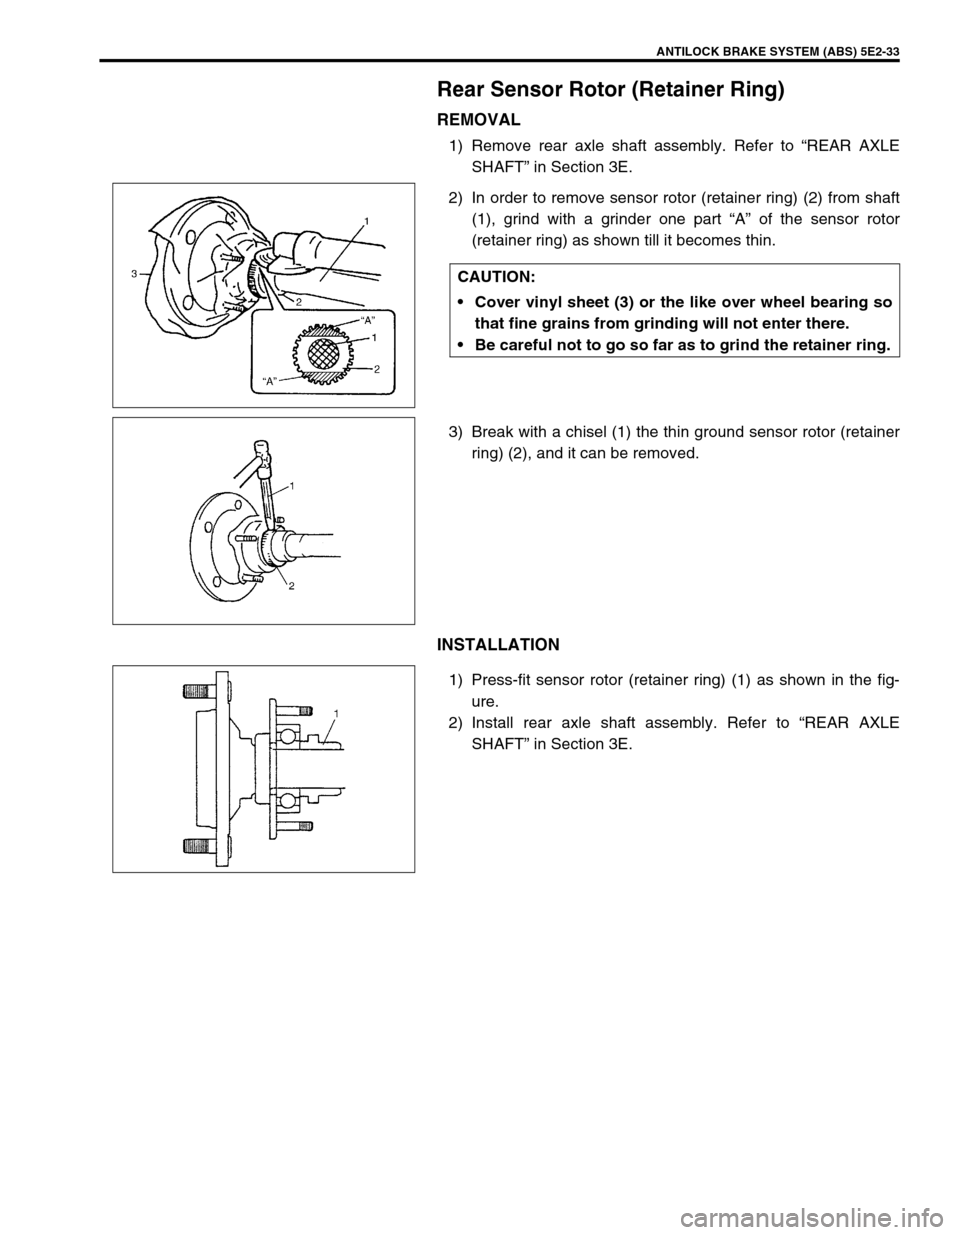 SUZUKI GRAND VITARA 1999 2.G Owners Manual ANTILOCK BRAKE SYSTEM (ABS) 5E2-33
Rear Sensor Rotor (Retainer Ring)
REMOVAL
1) Remove rear axle shaft assembly. Refer to “REAR AXLE
SHAFT” in Section 3E.
2) In order to remove sensor rotor (retai